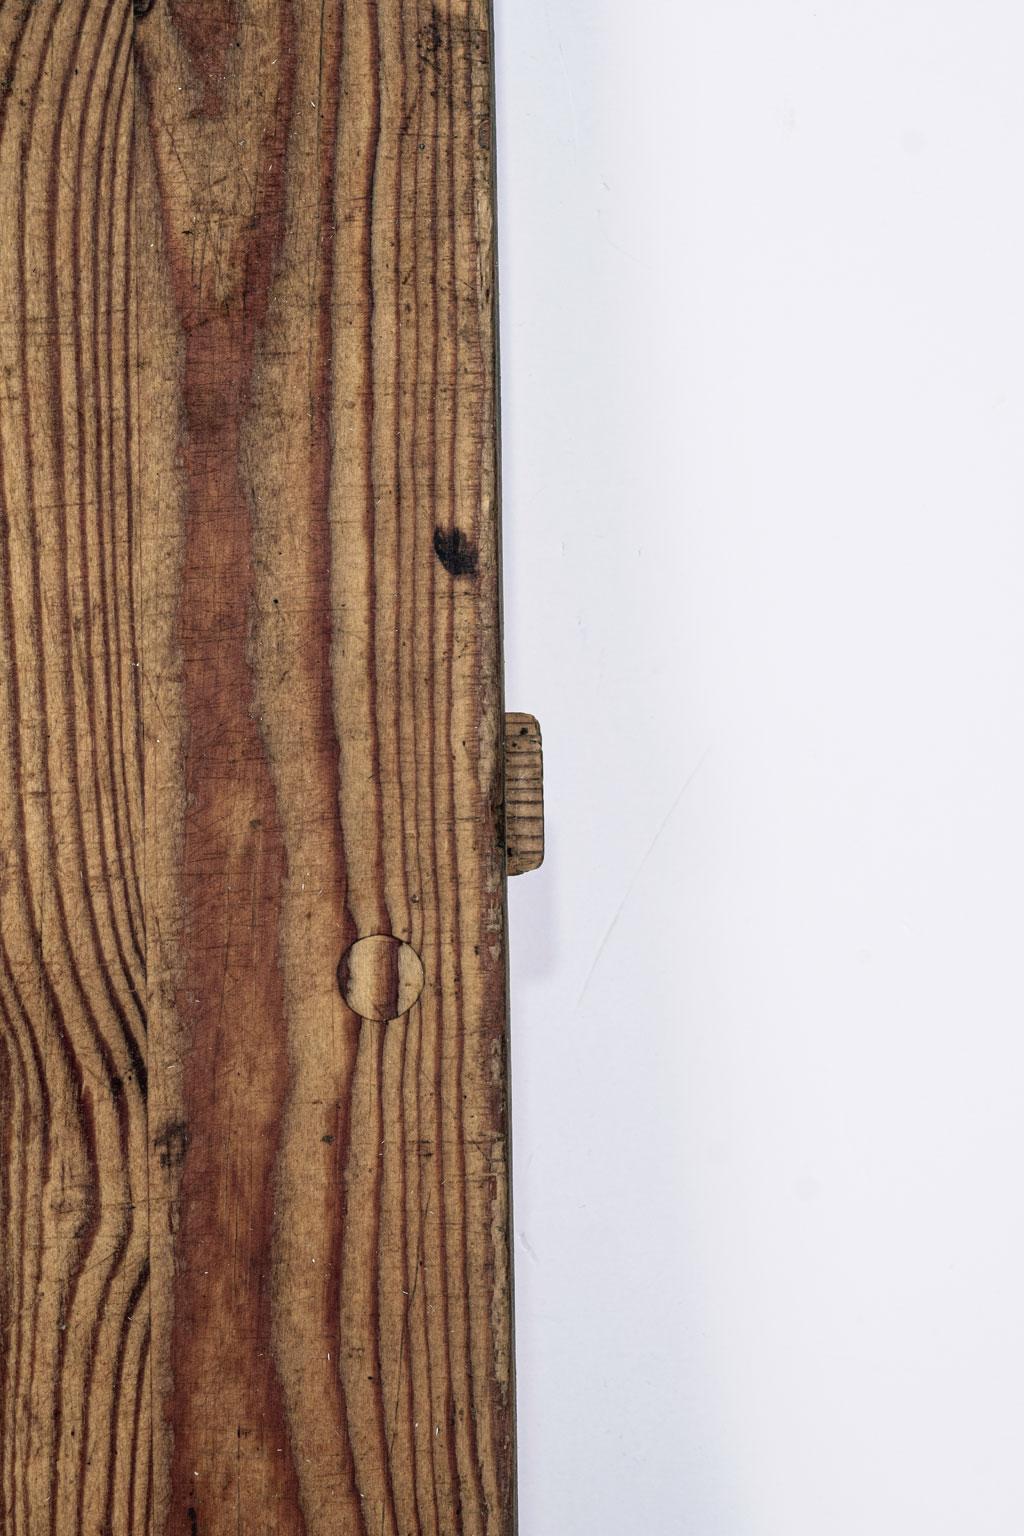 19th century French pine cutting board.